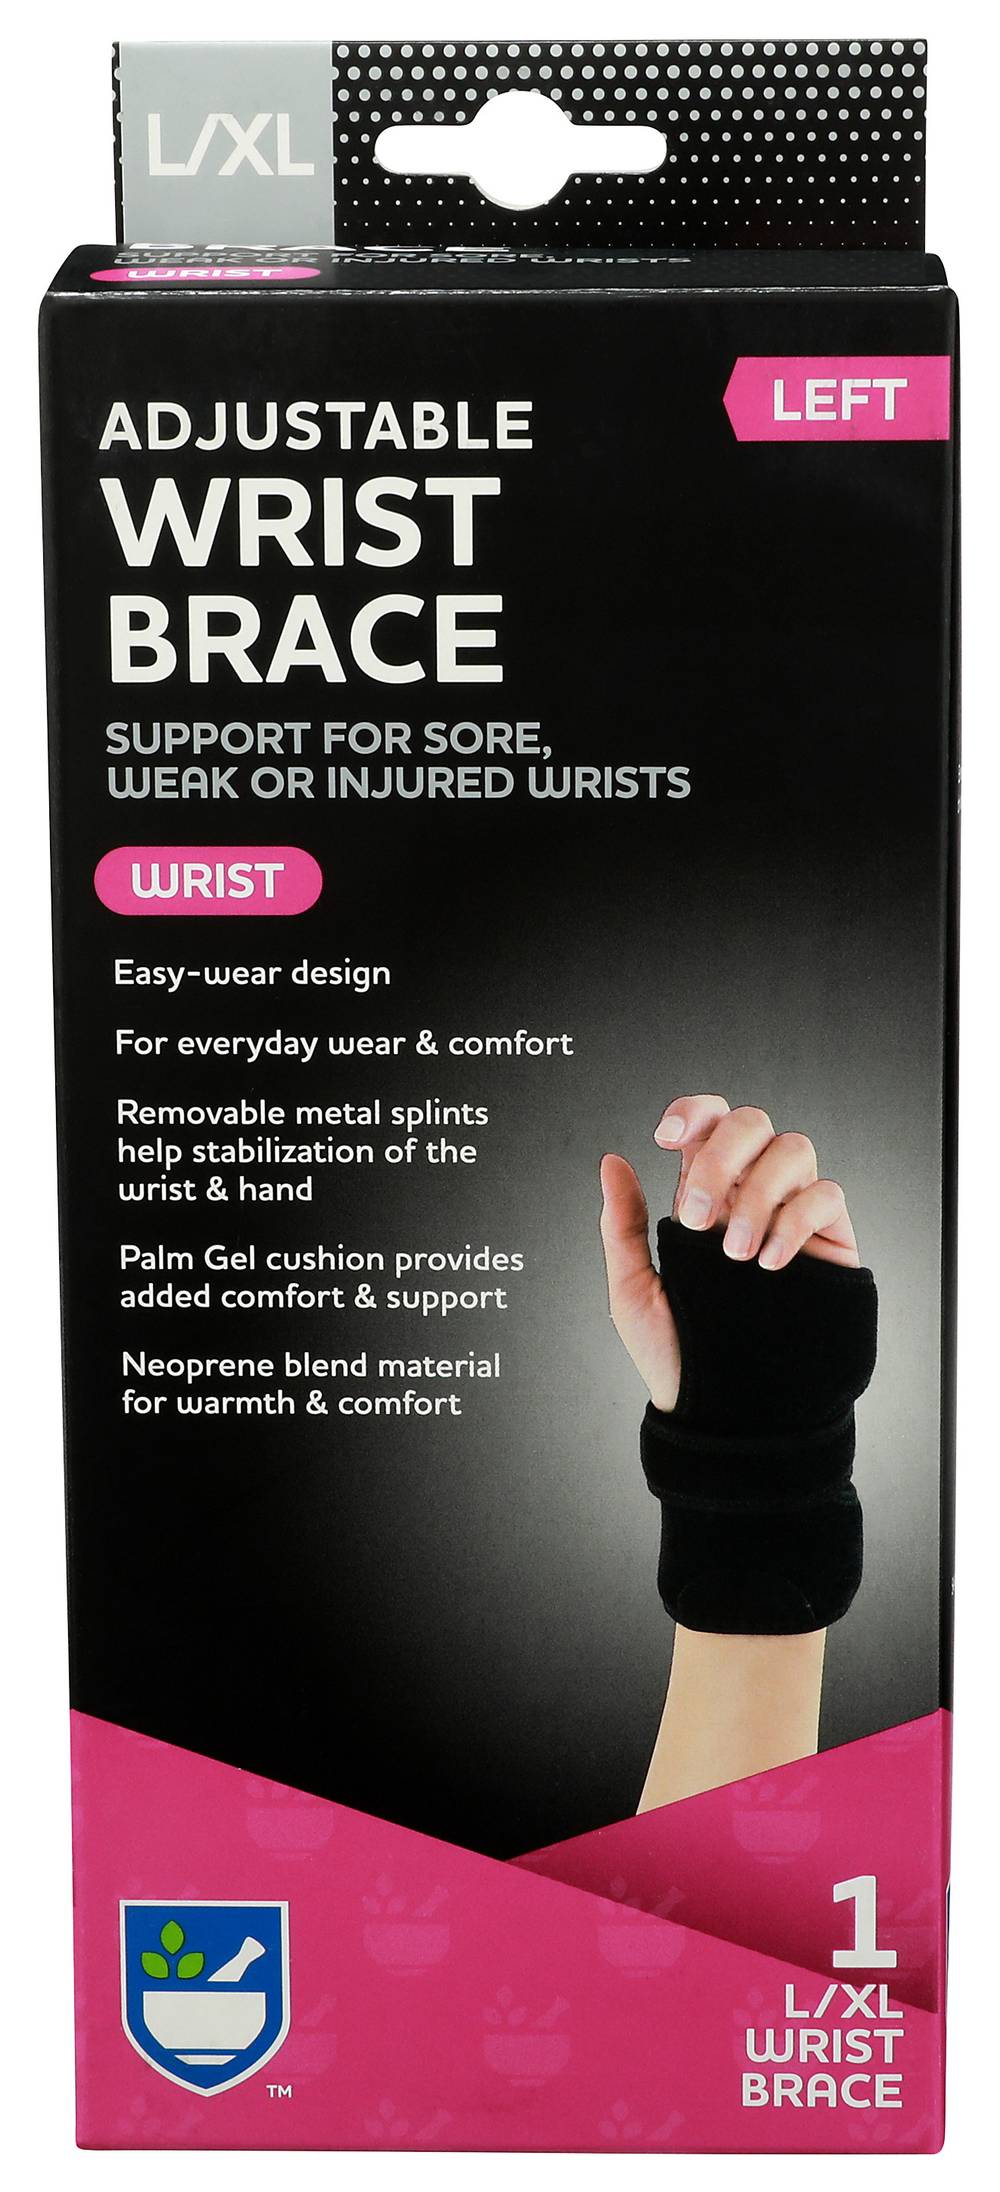 Rite Aid Adjustable Wrist Brace Left, Large/Extra Large (1 ct)